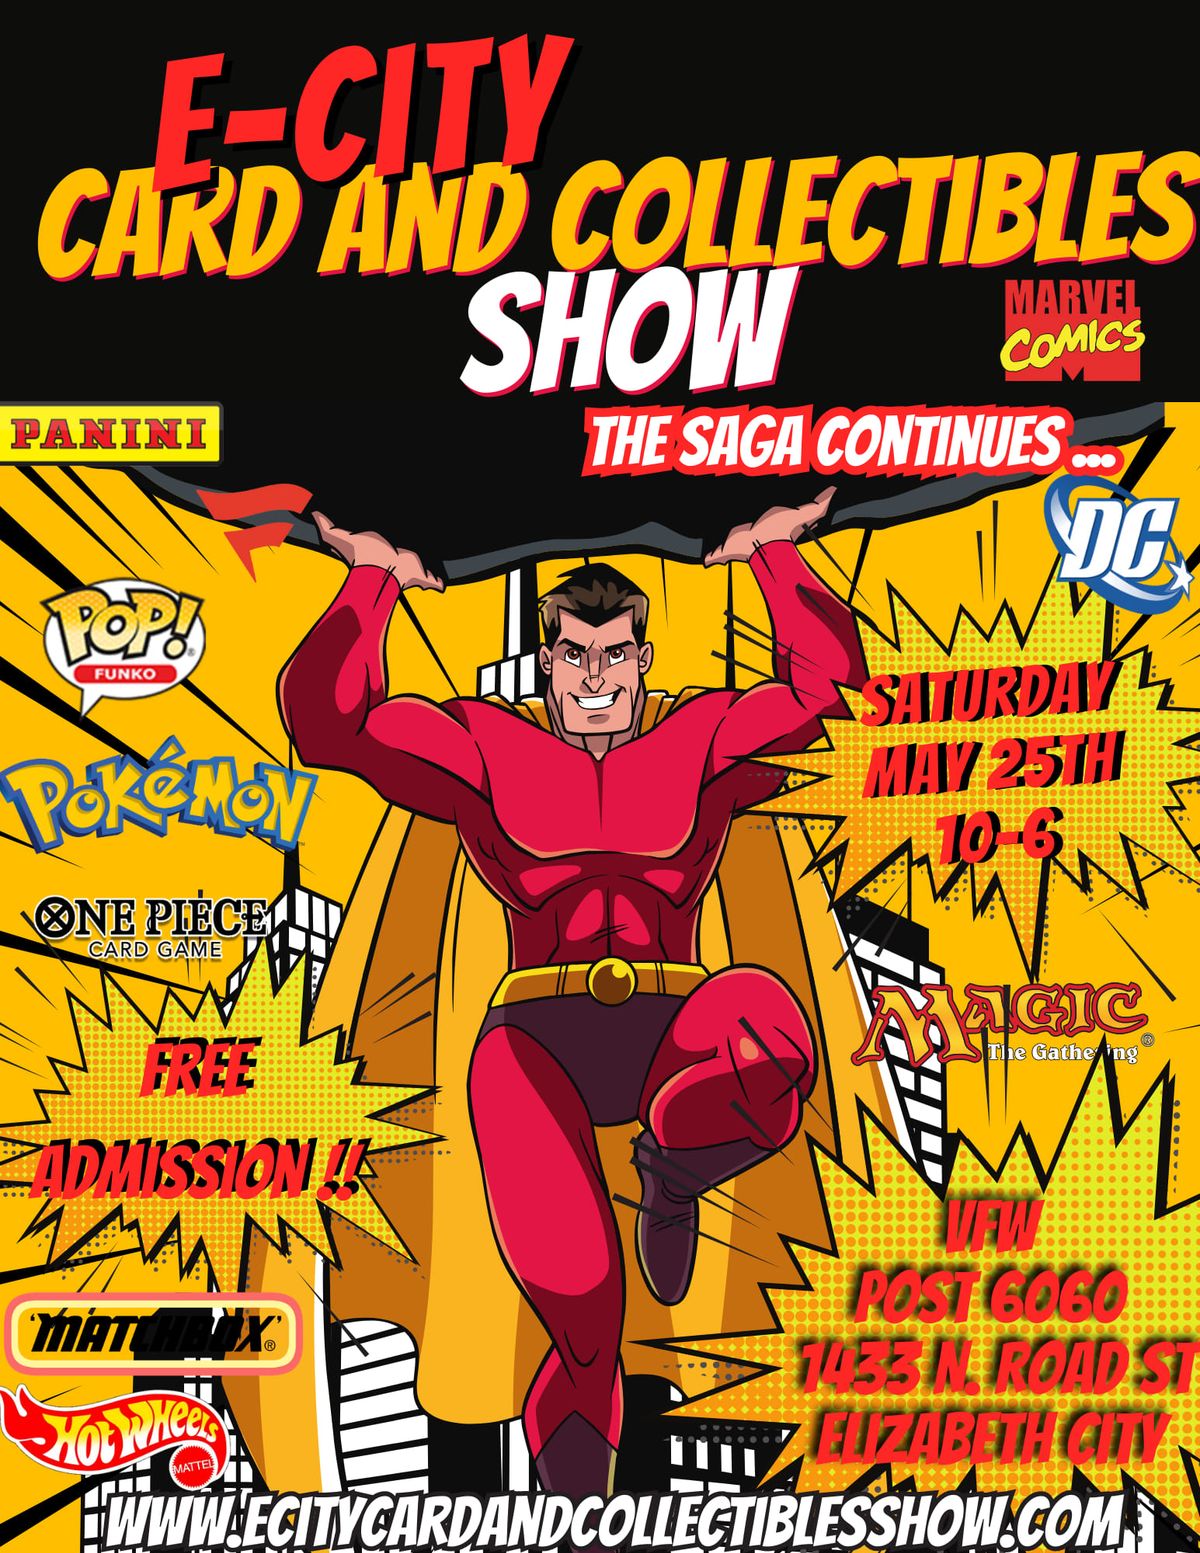 E-City Card and Collectibles Show..the saga continues 